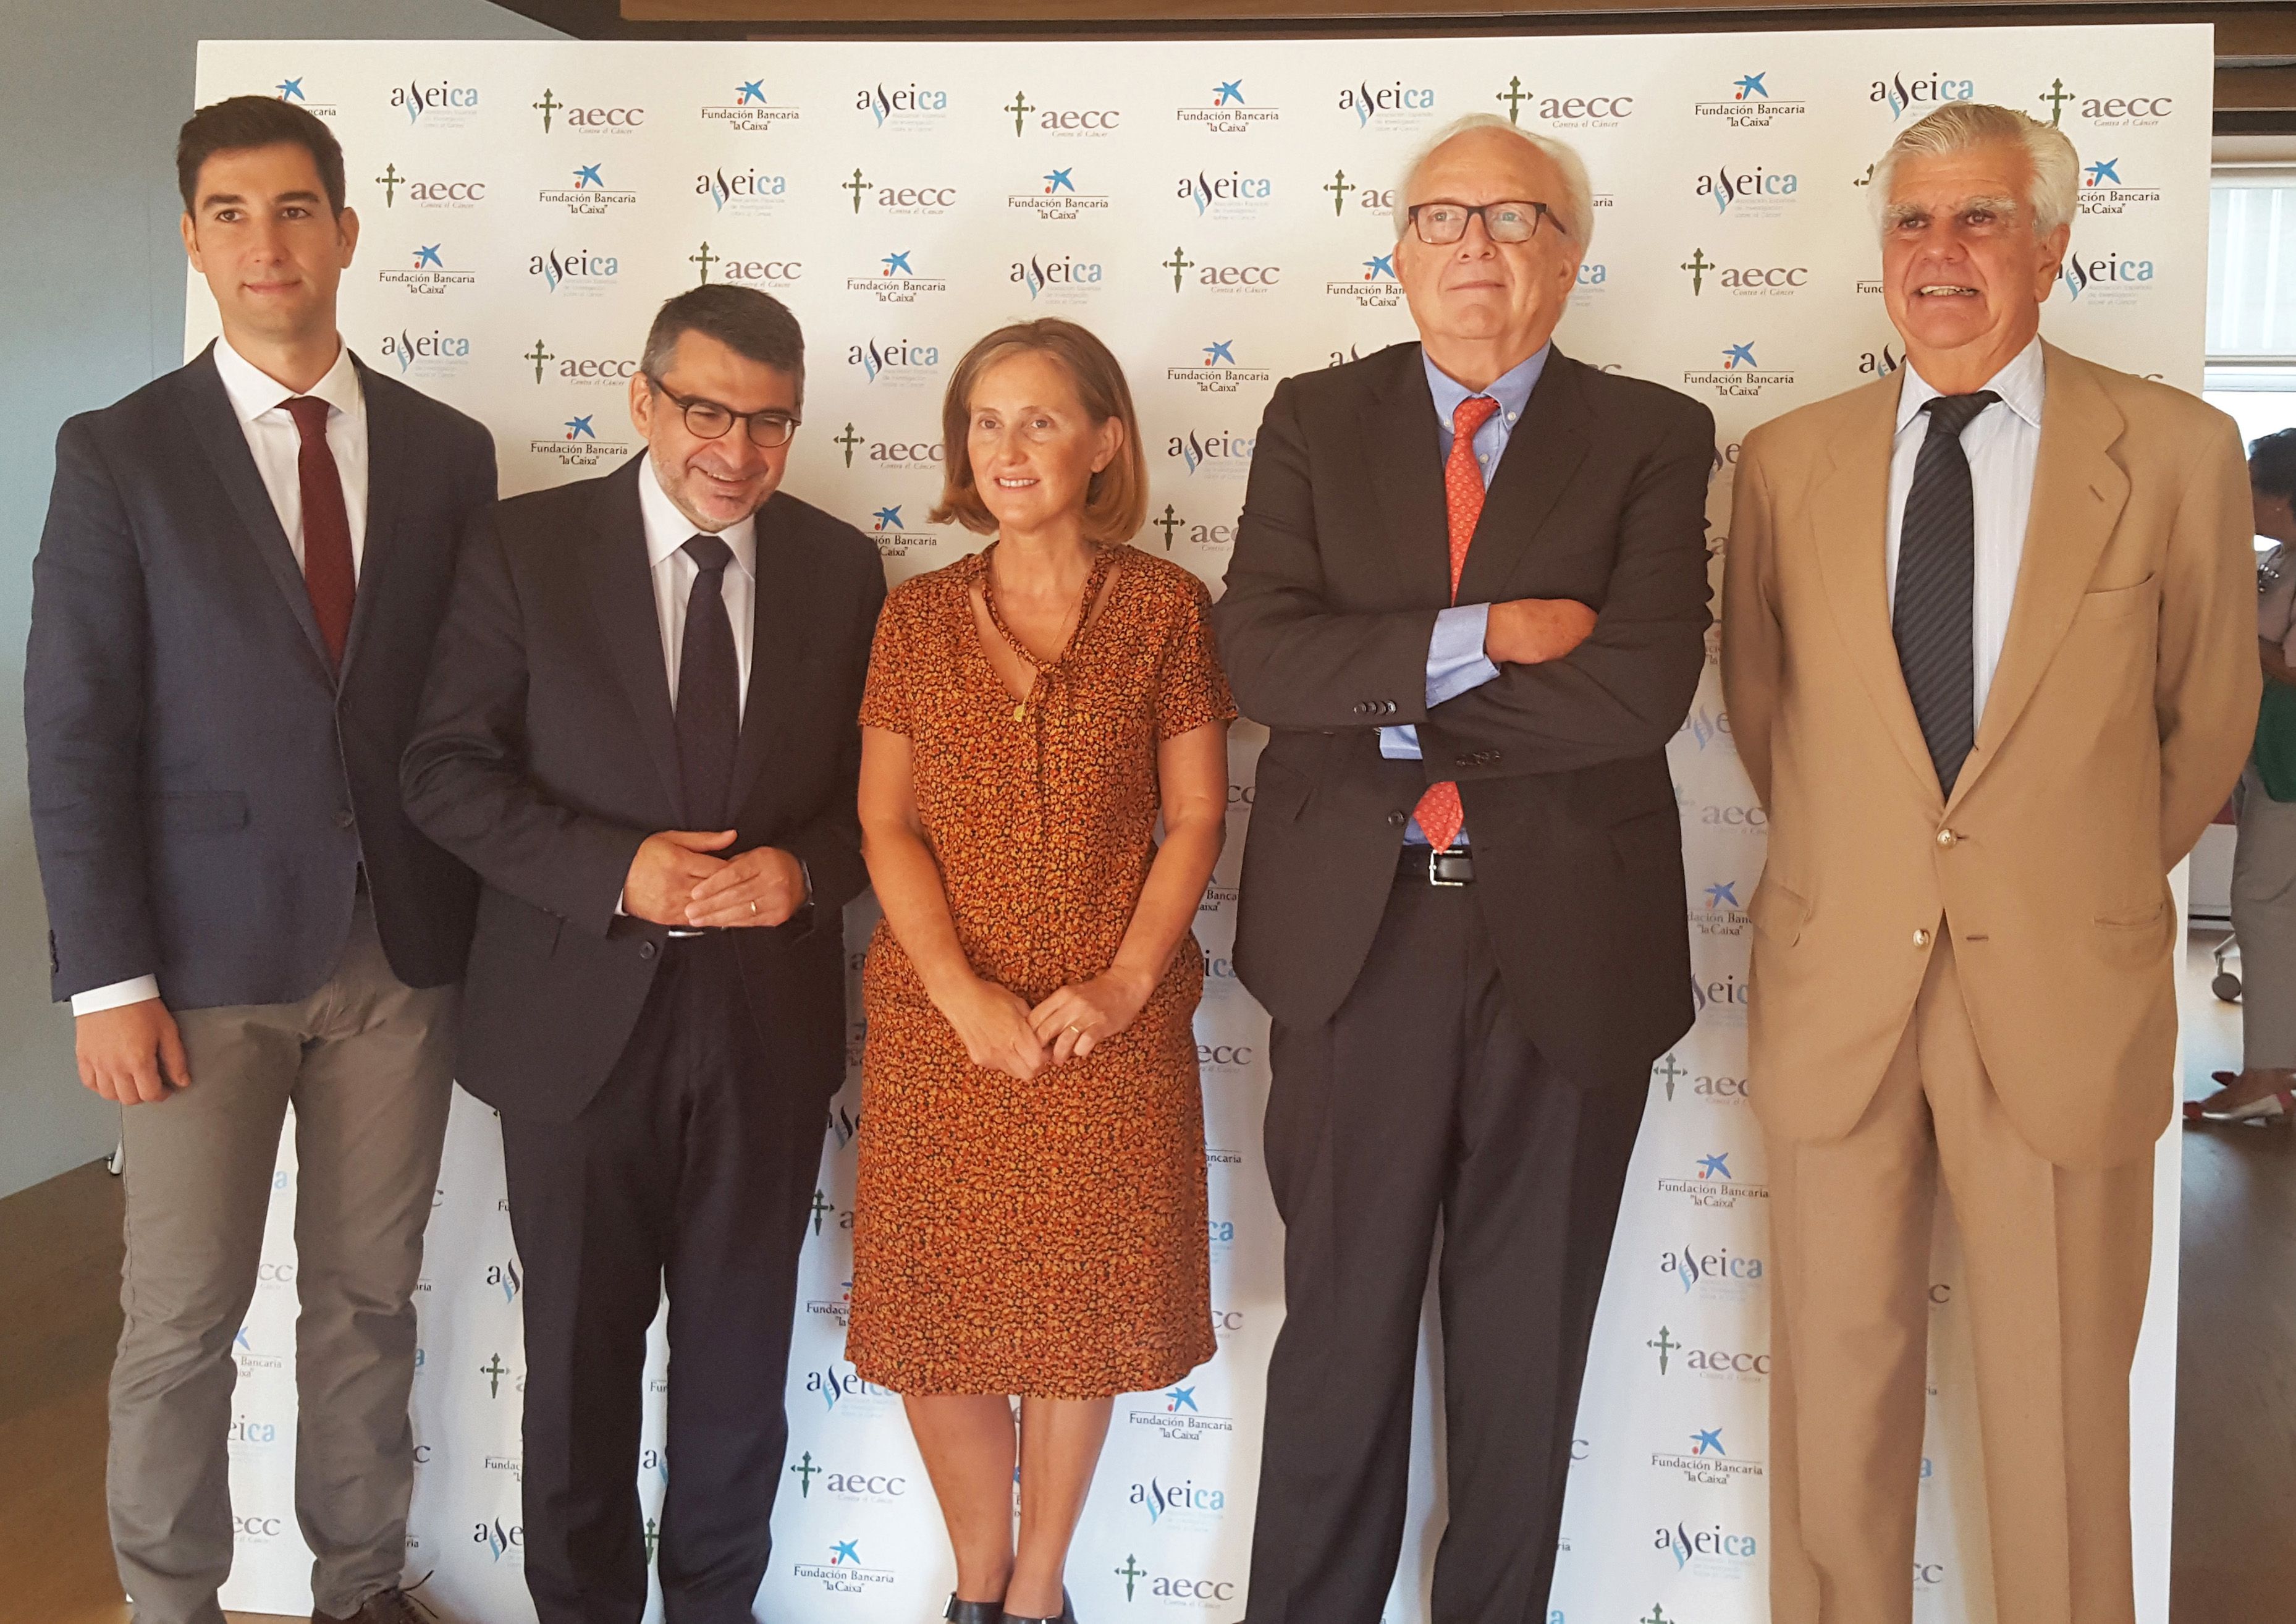 Tres entidades privadas se han unido para elaborar el primer informe sobre la investigación e innovación en cáncer en España